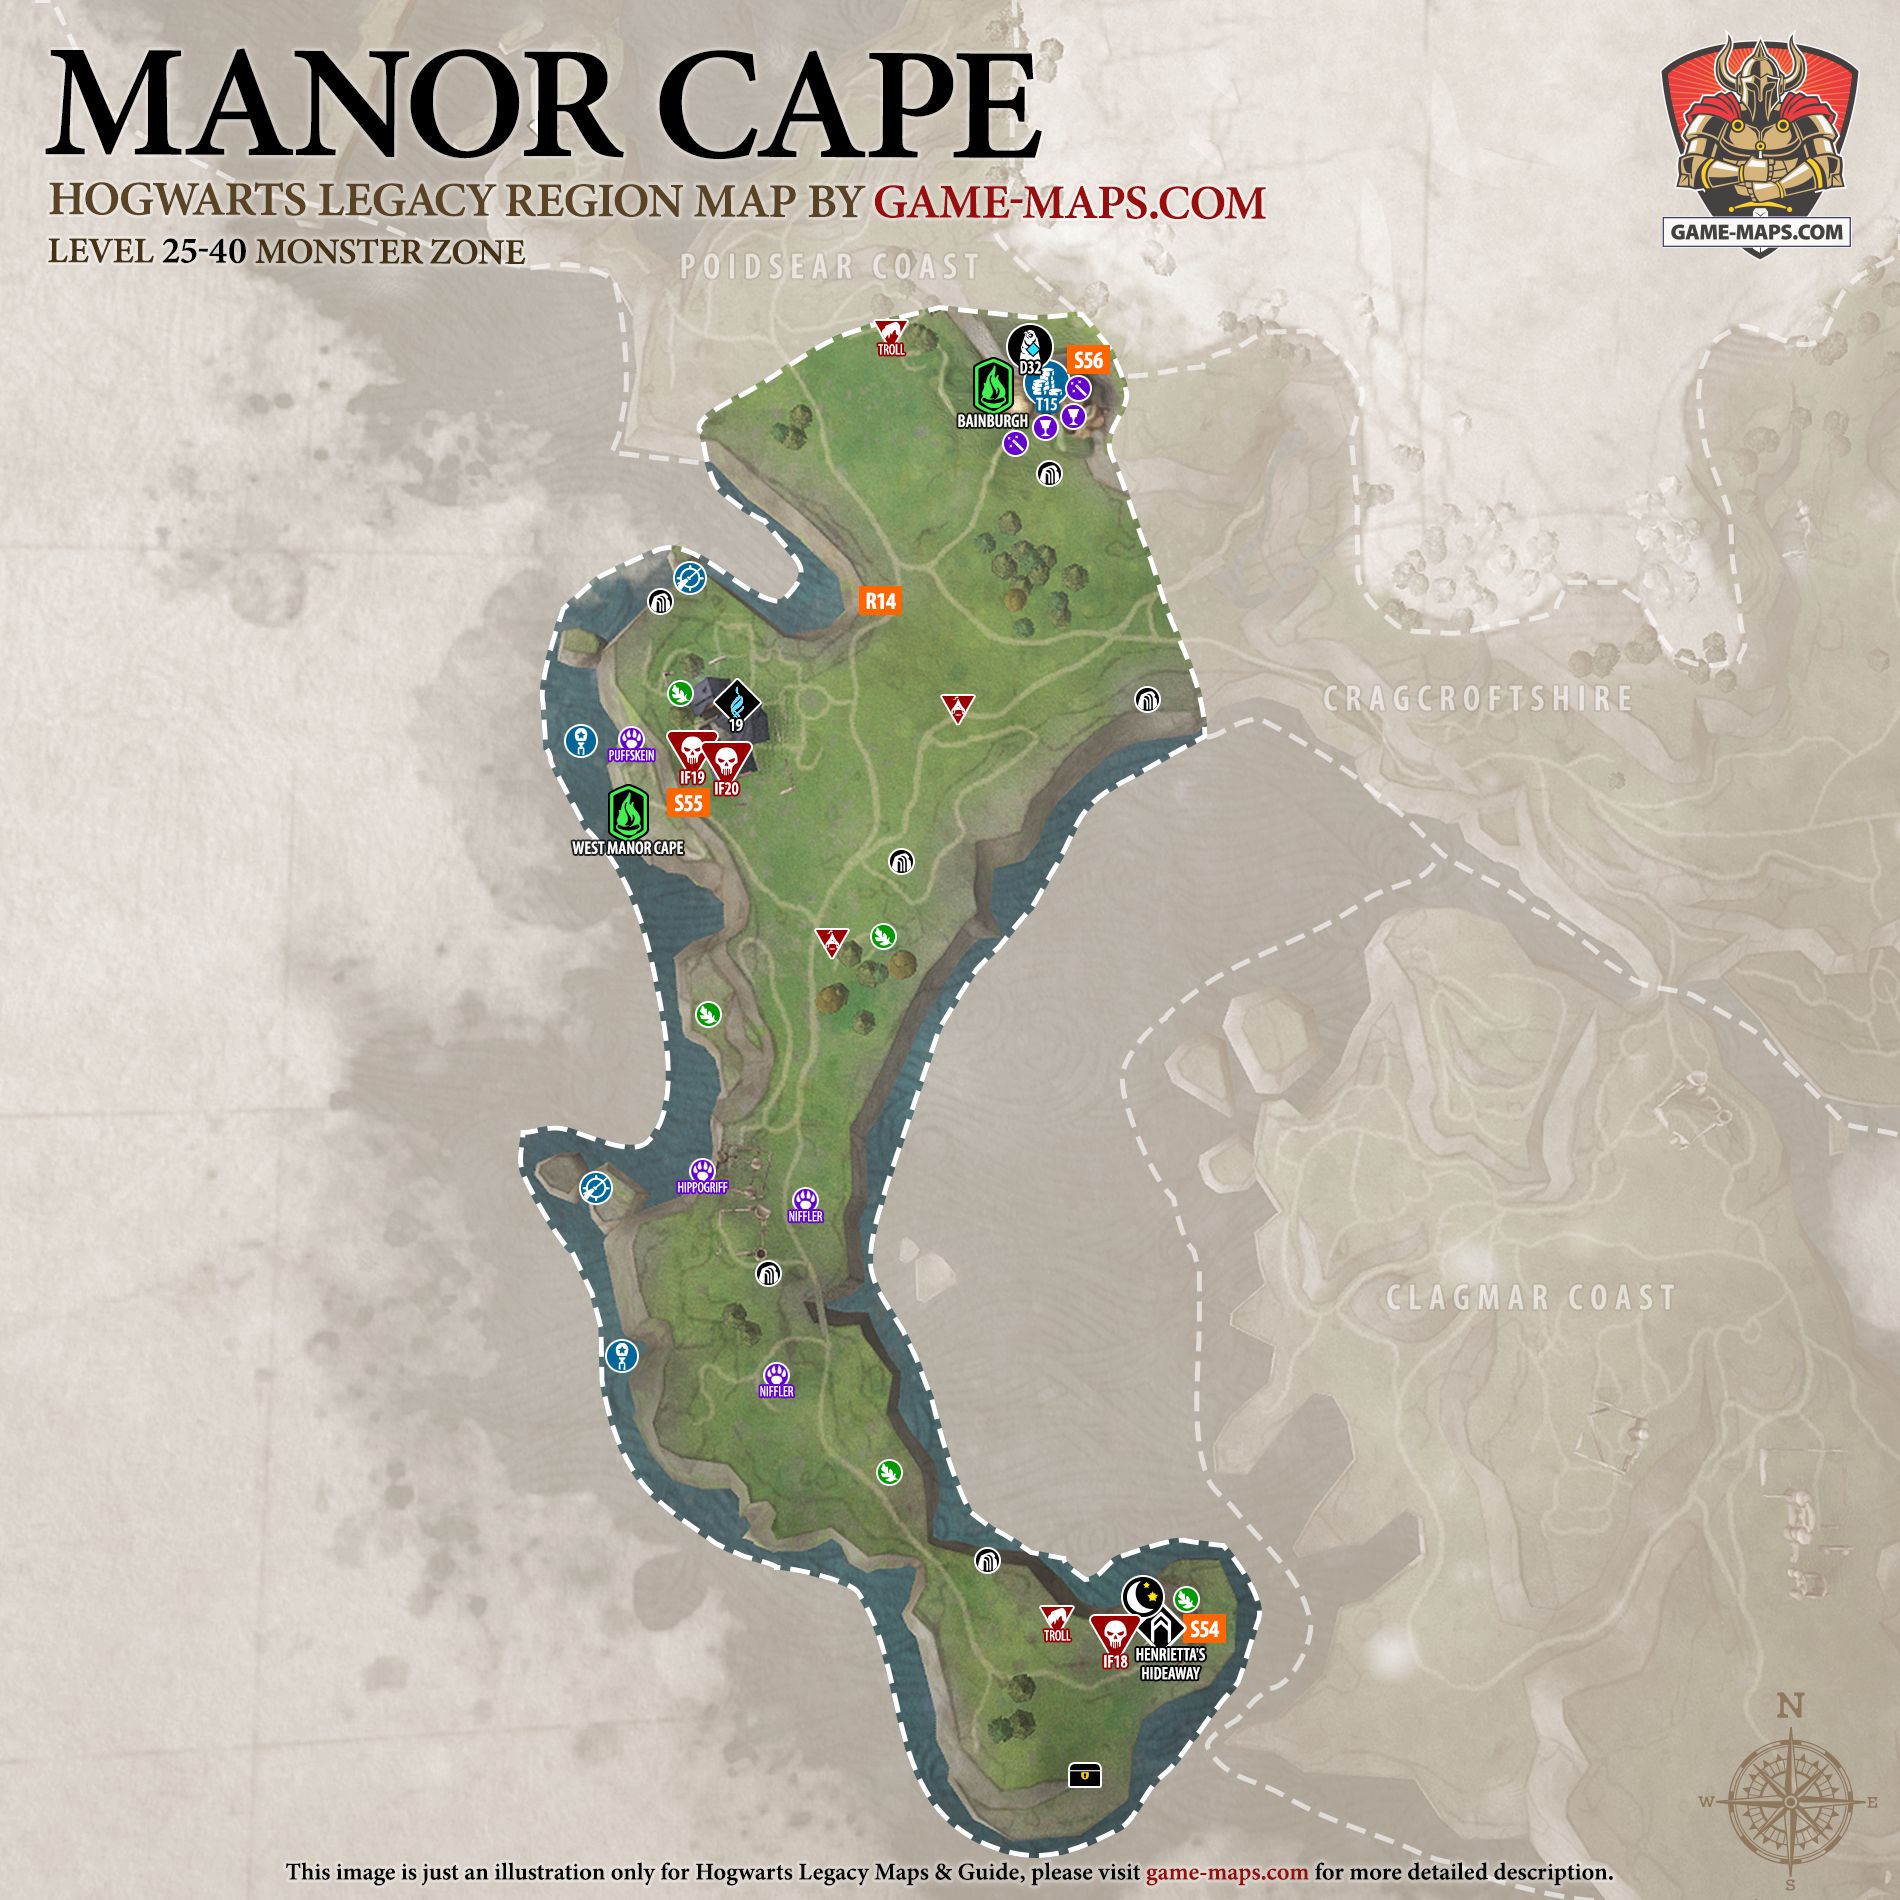 Hogwarts Legacy Map of Manor Cape